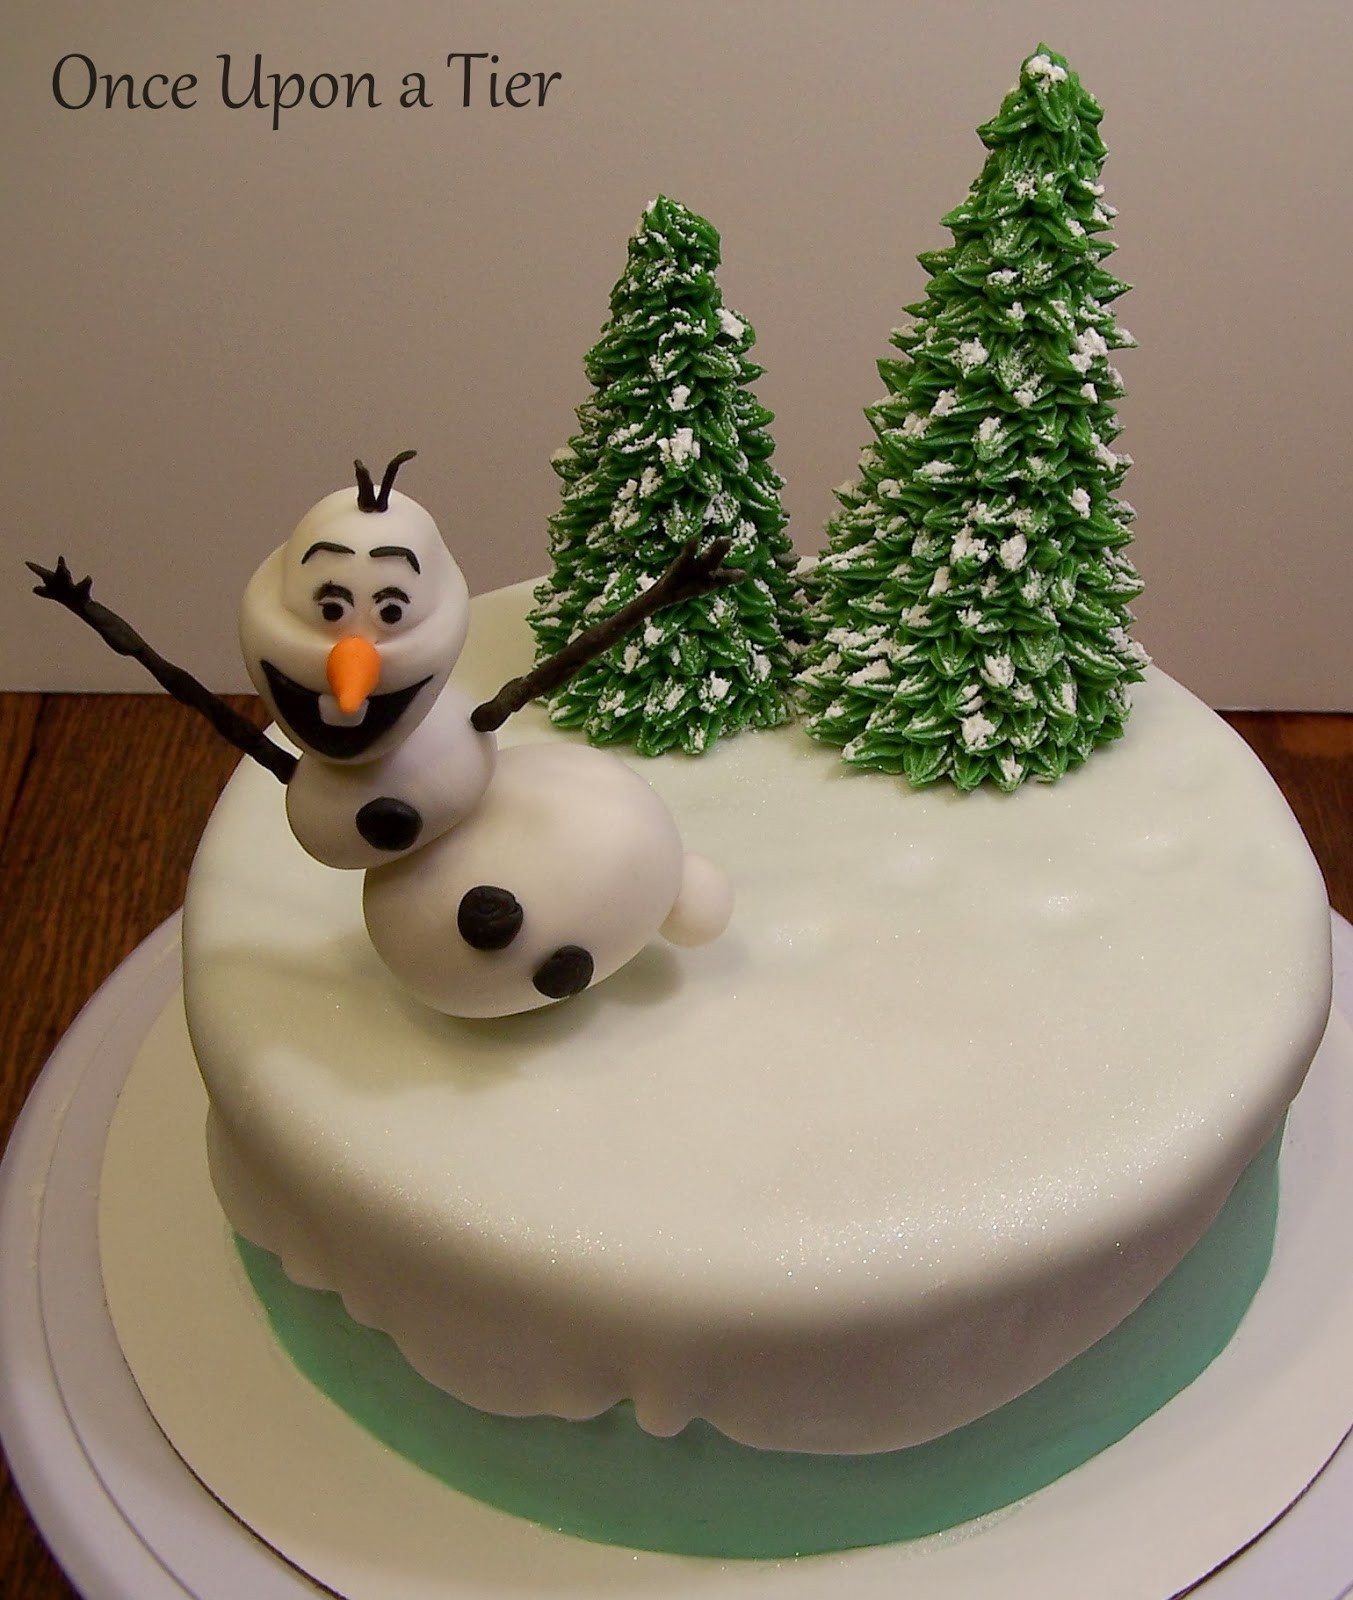 Olaf Birthday Cakes
 ce Upon a Tier Olaf Cake Rachel s Birthday Cake